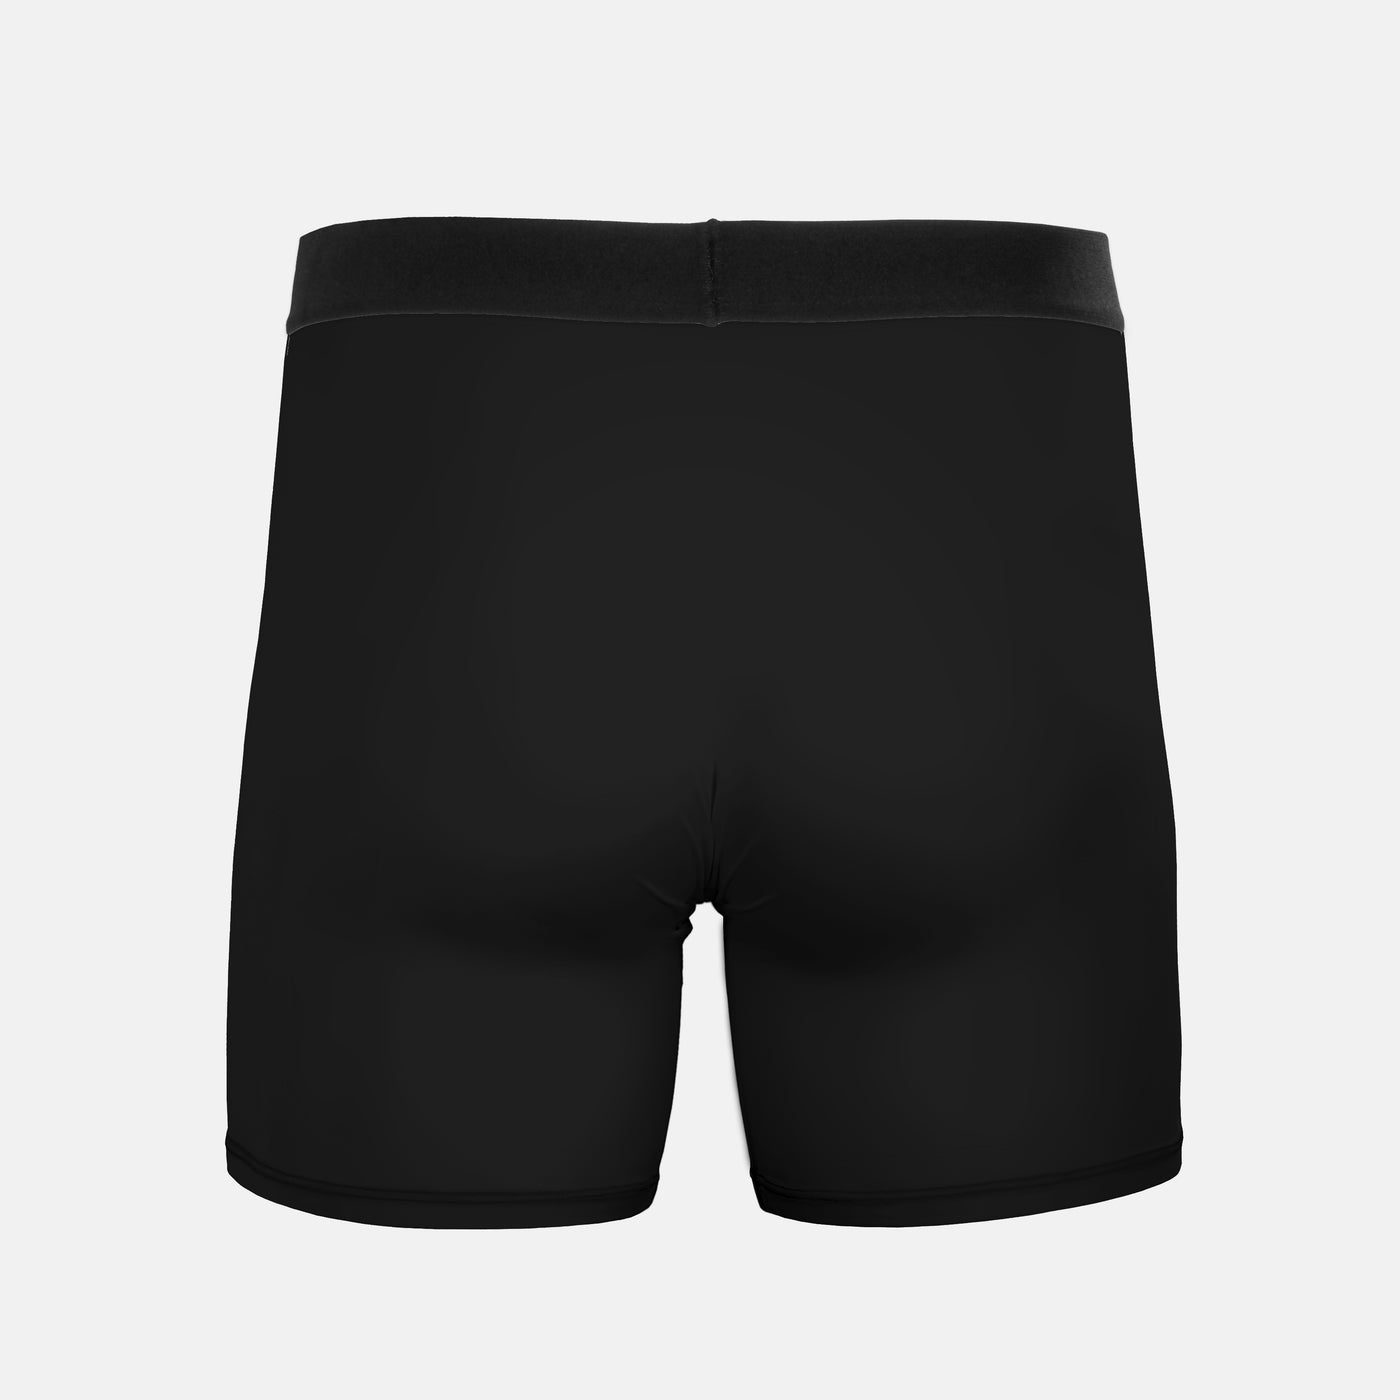 Basic Black Men's Underwear